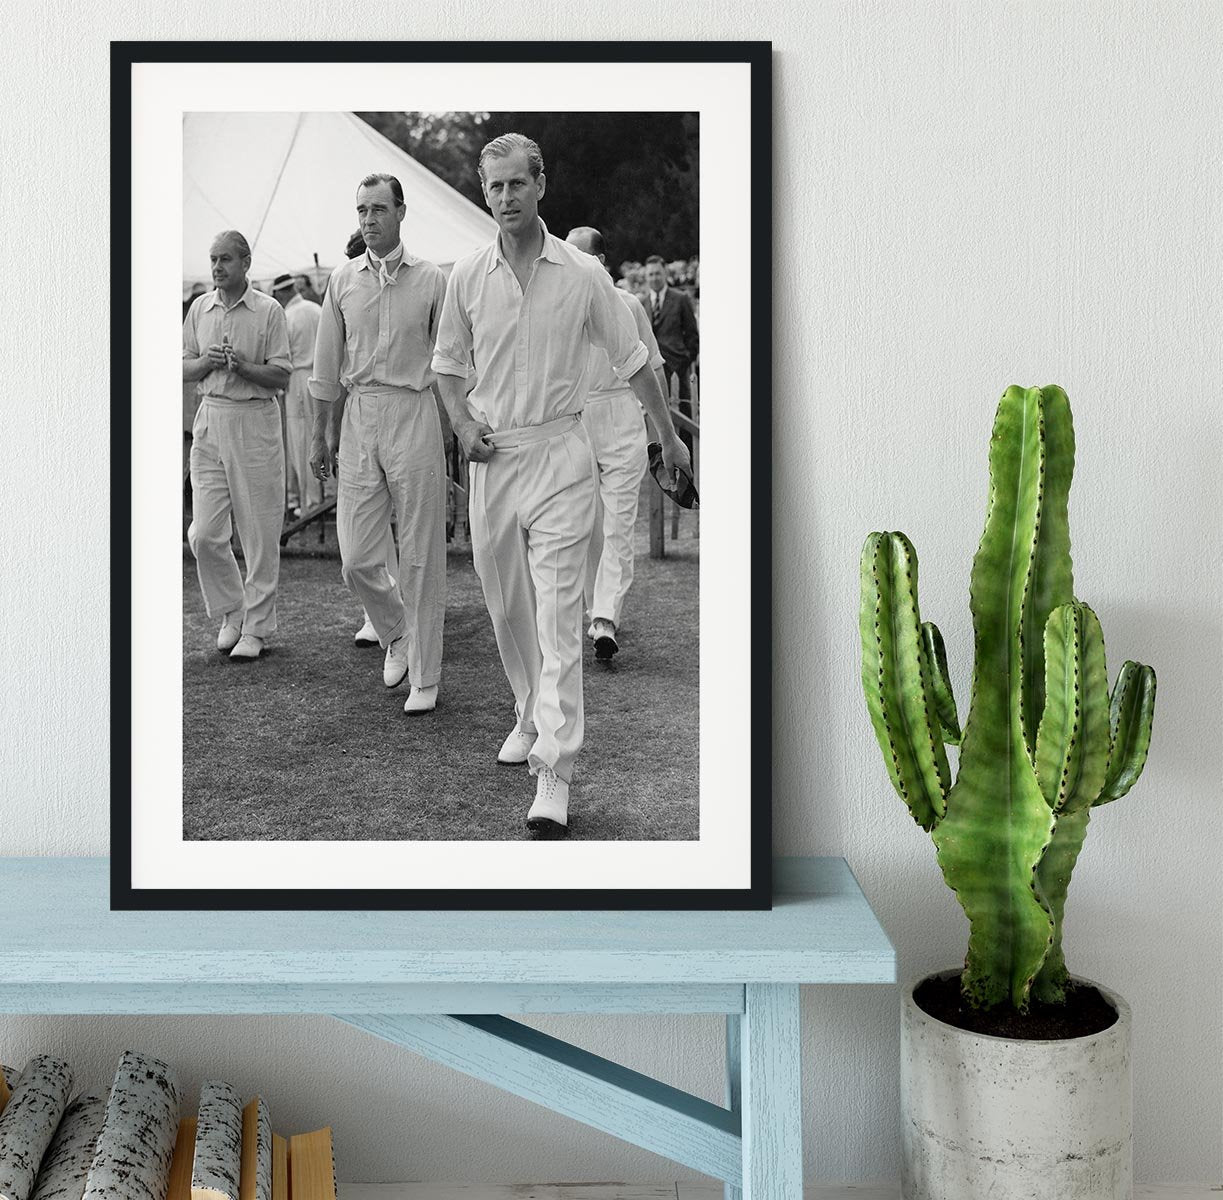 Prince Philip leading his cricket team onto the field Framed Print - Canvas Art Rocks - 1